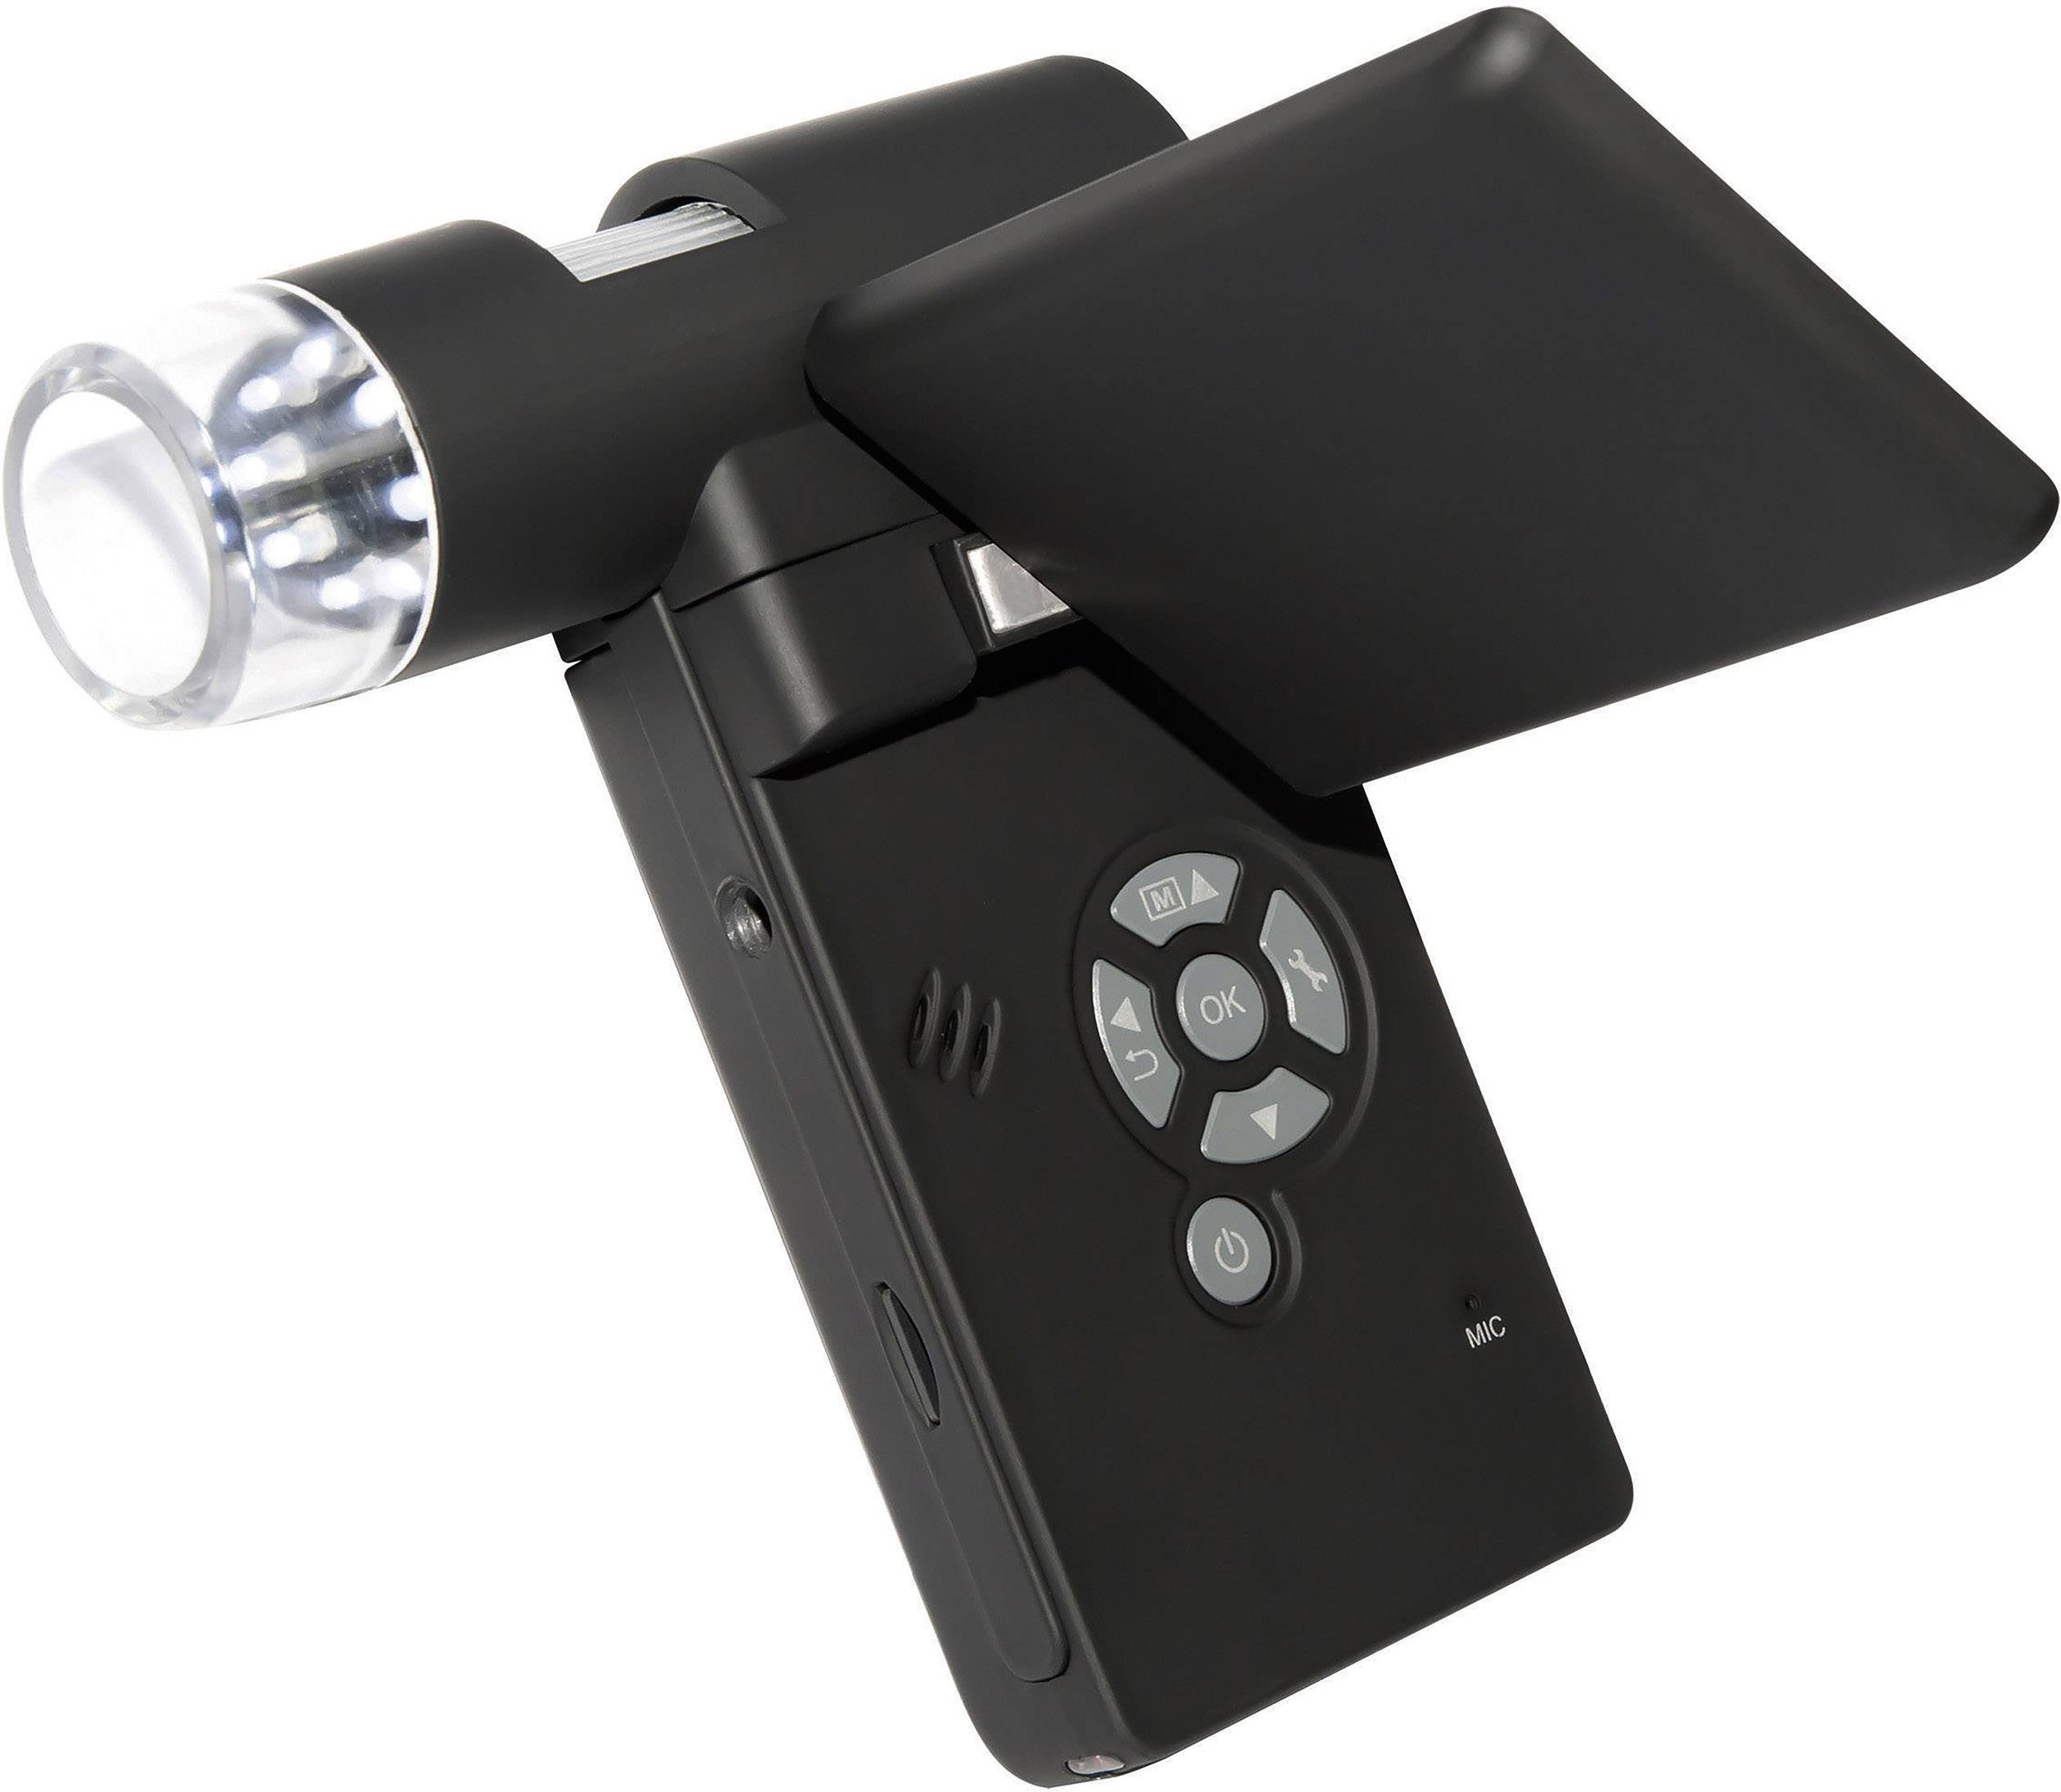 TOOLCRAFT USB microscope monitor 5 MP Digital zoom (max.): 500 x | Conrad.com